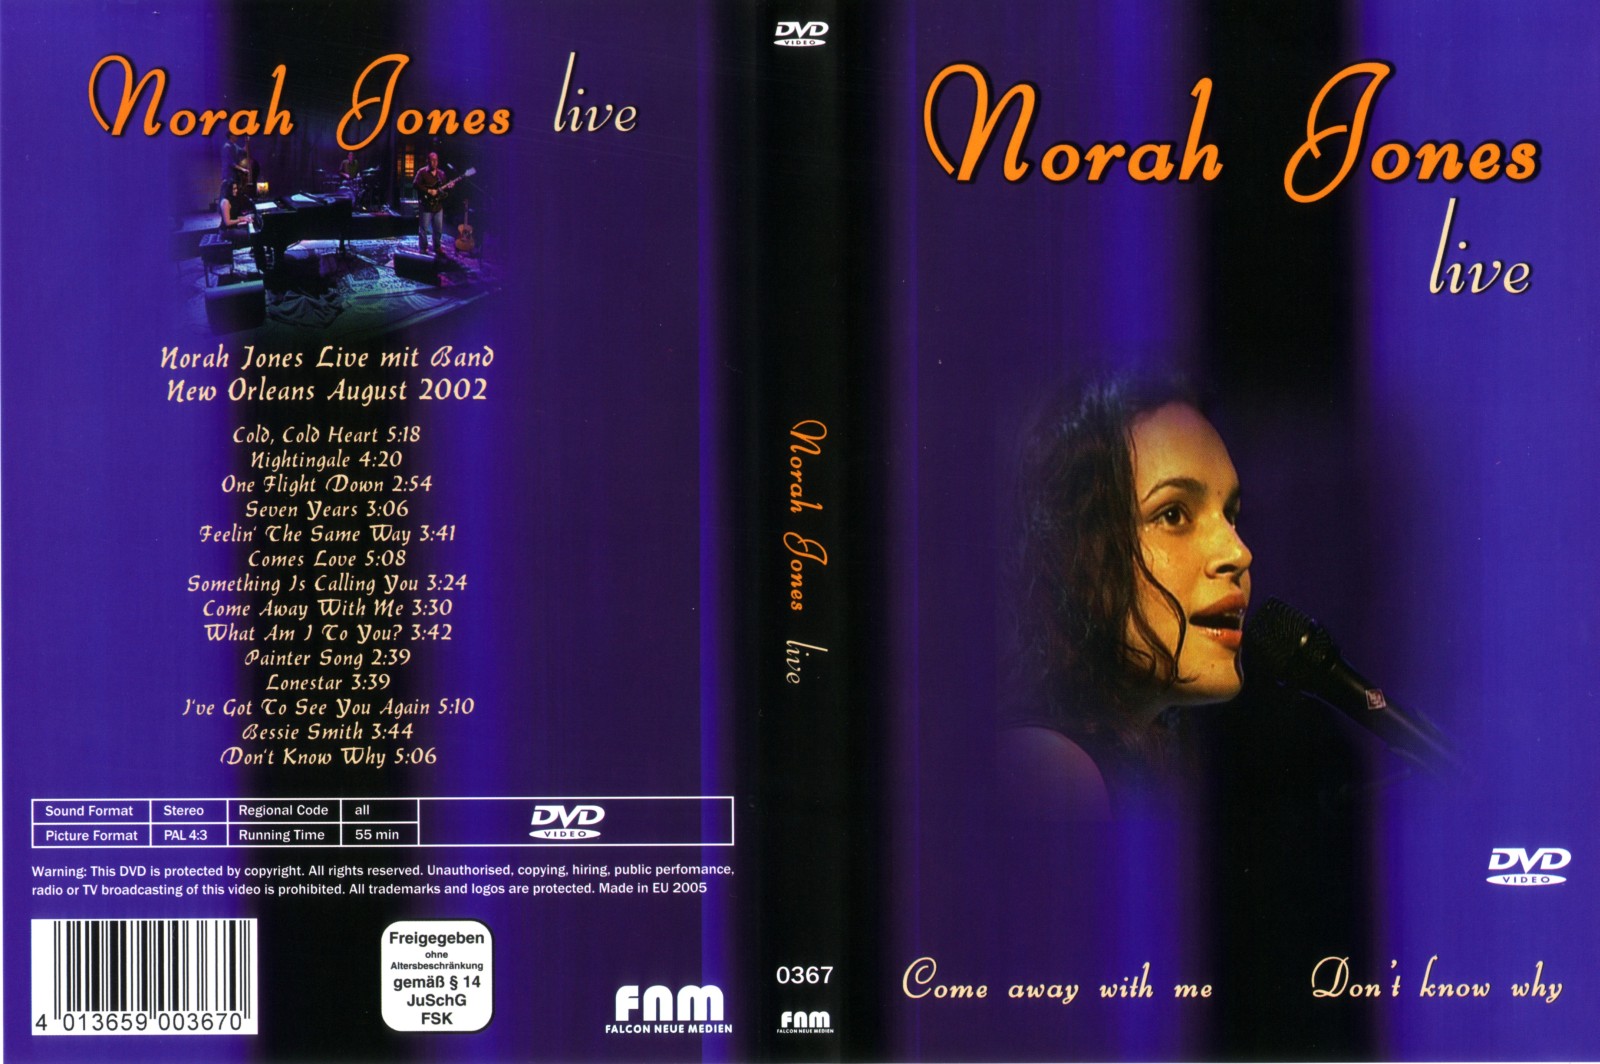 Jaquette DVD Norah Jones Live in New Orleans